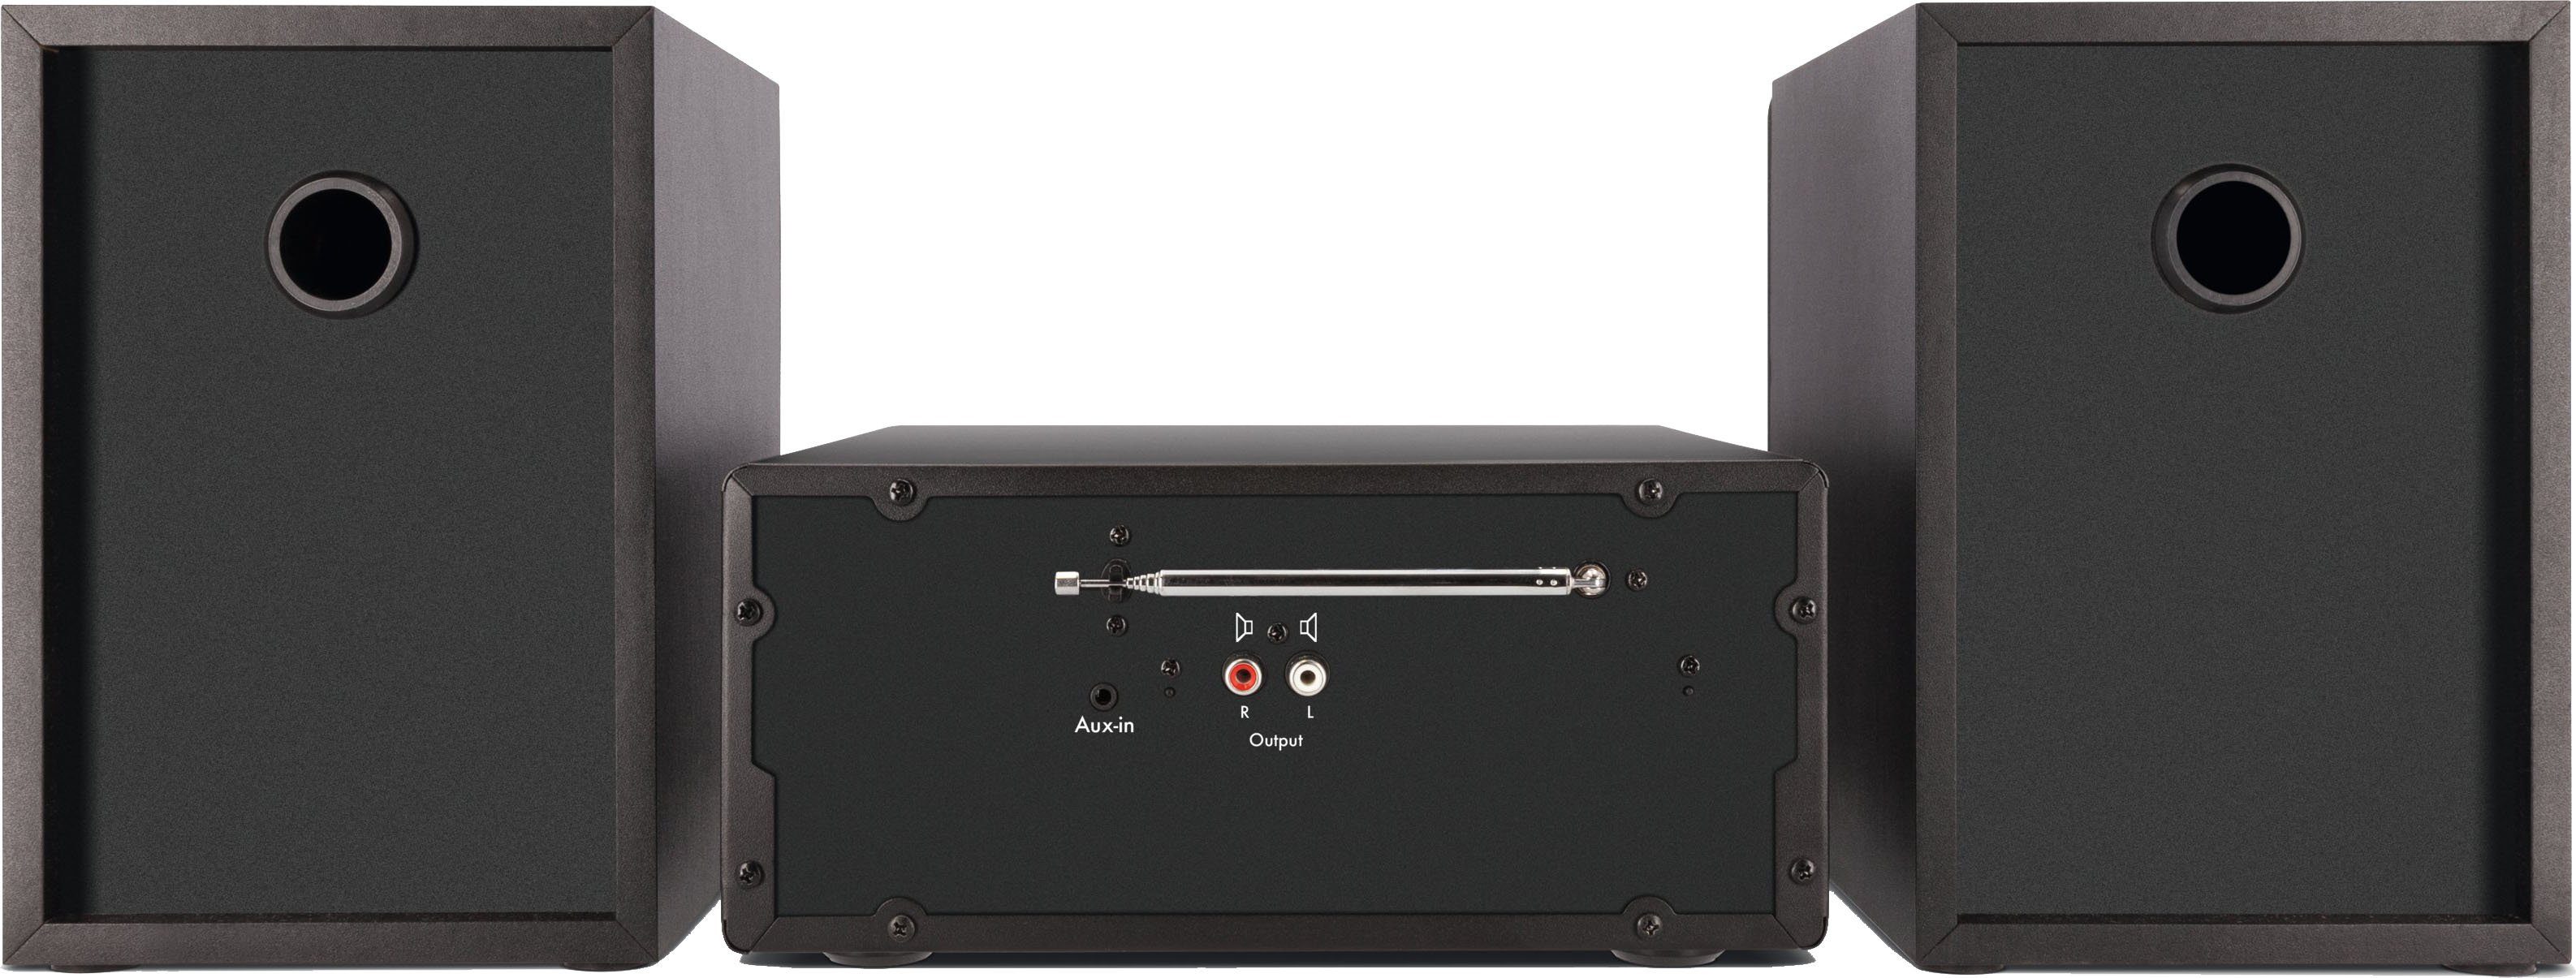 Internetradio, (DAB), DIGITRADIO 40 Microanlage Stereo- RDS, TechniSat 700 mit UKW W) (Digitalradio